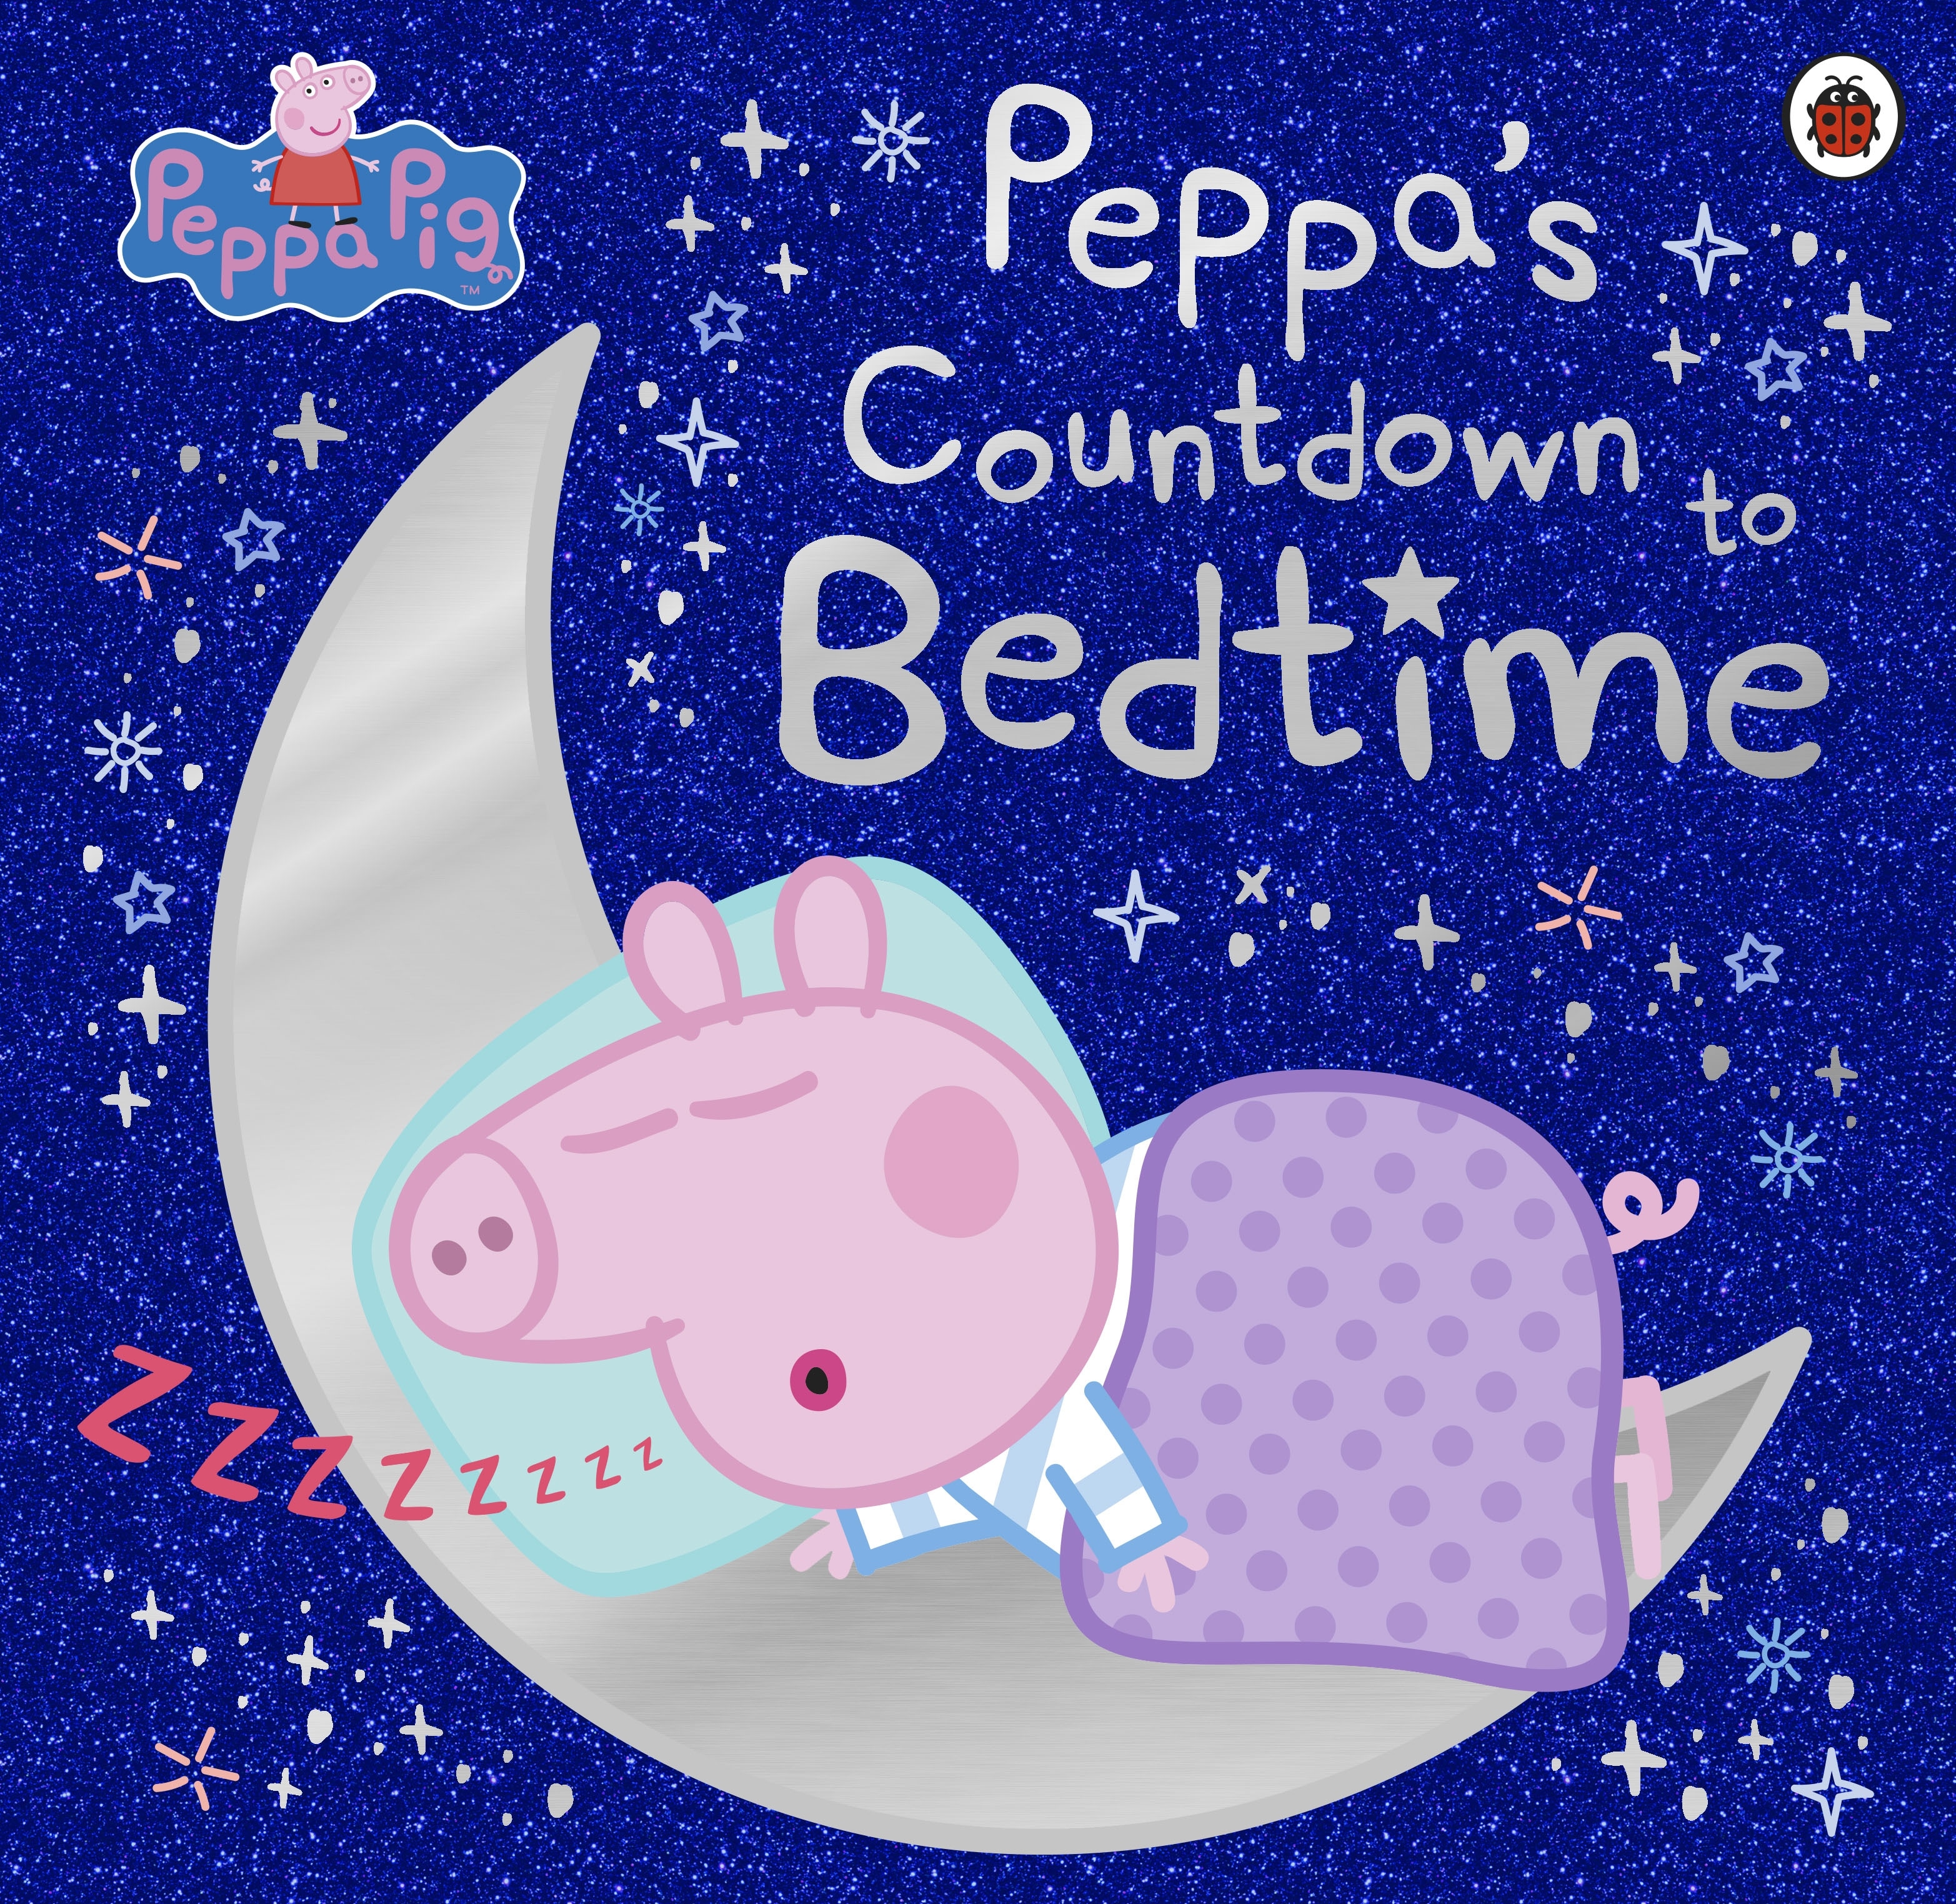 Book “Peppa Pig: Peppa's Countdown to Bedtime” by Peppa Pig — April 29, 2021